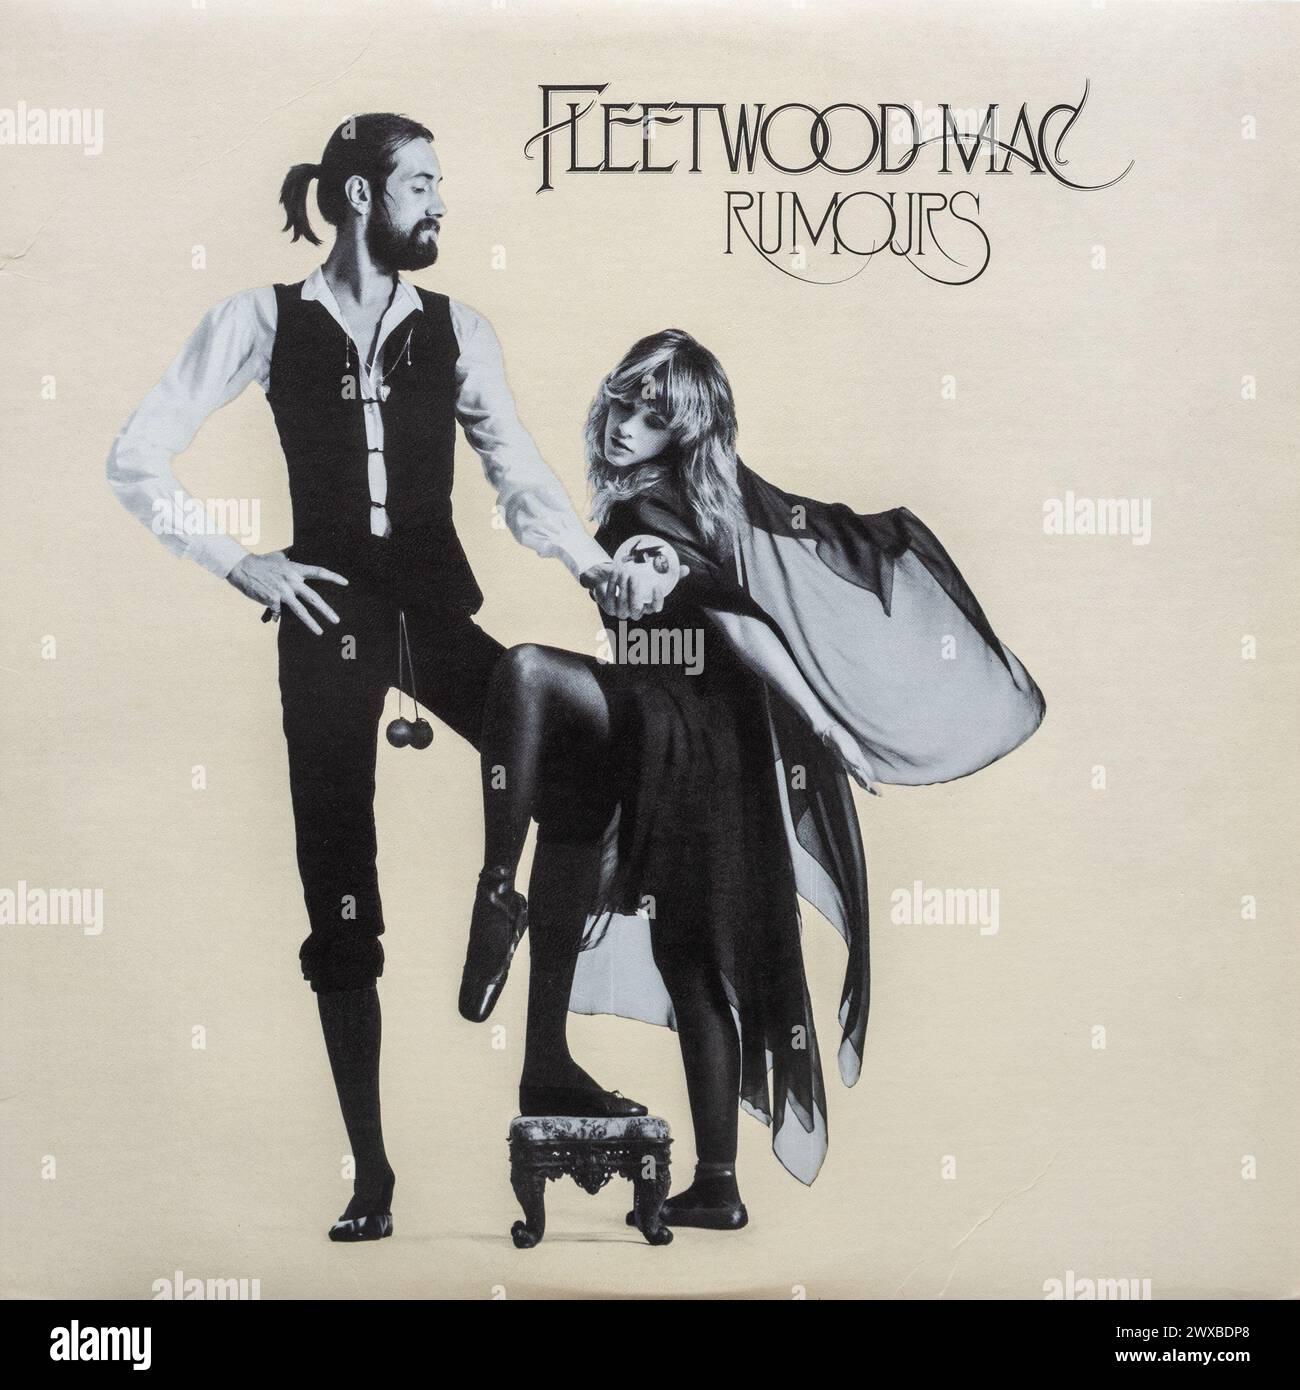 Fleetwood Mac Rumours album, vinyl LP record cover Stock Photo